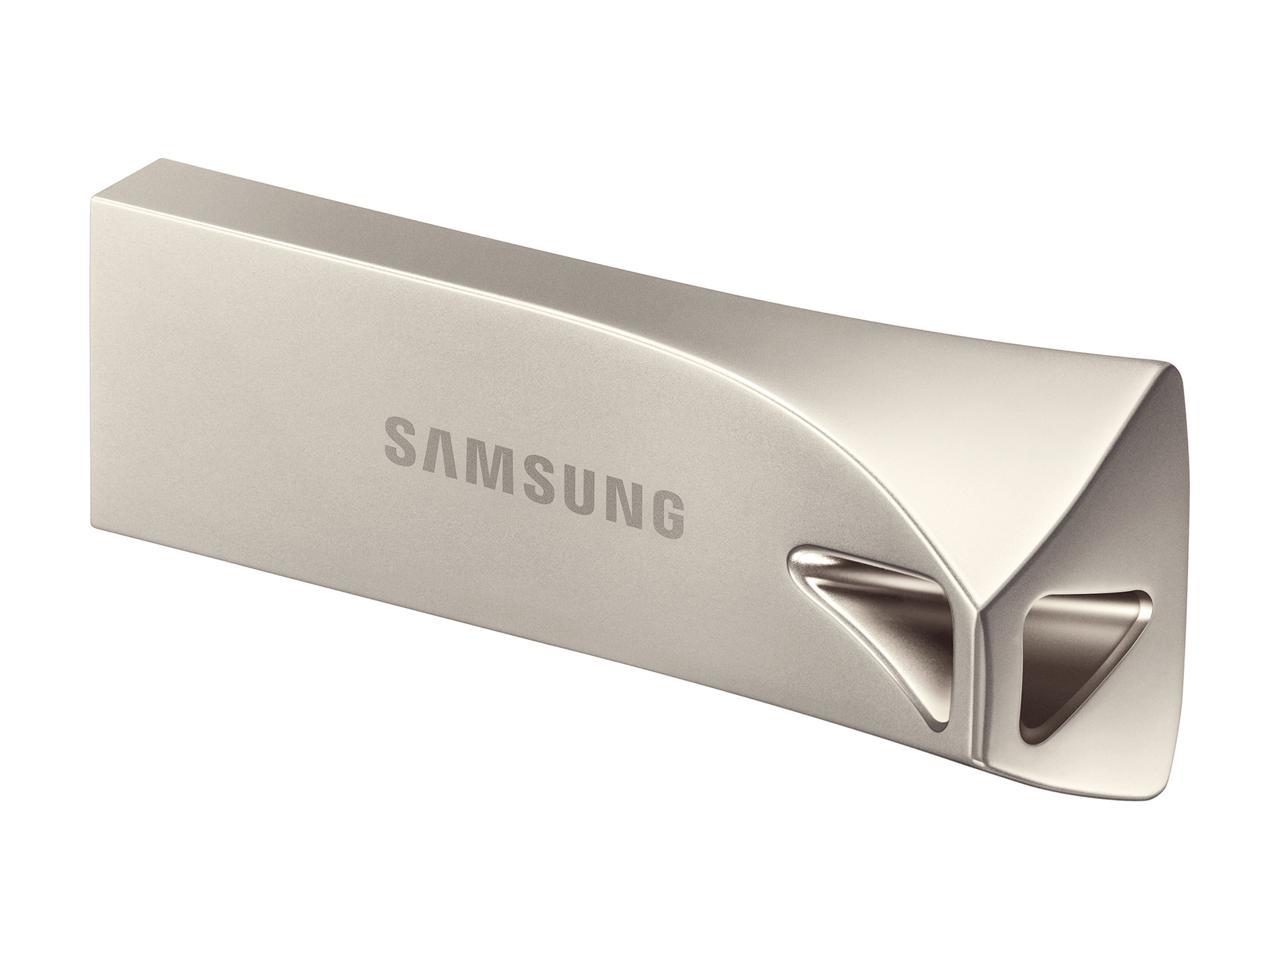 SAMSUNG 256GB BAR Plus (Metal) USB 3.1 Flash Drive, Speed Up to 400MB/s (MUF-256BE3/AM)